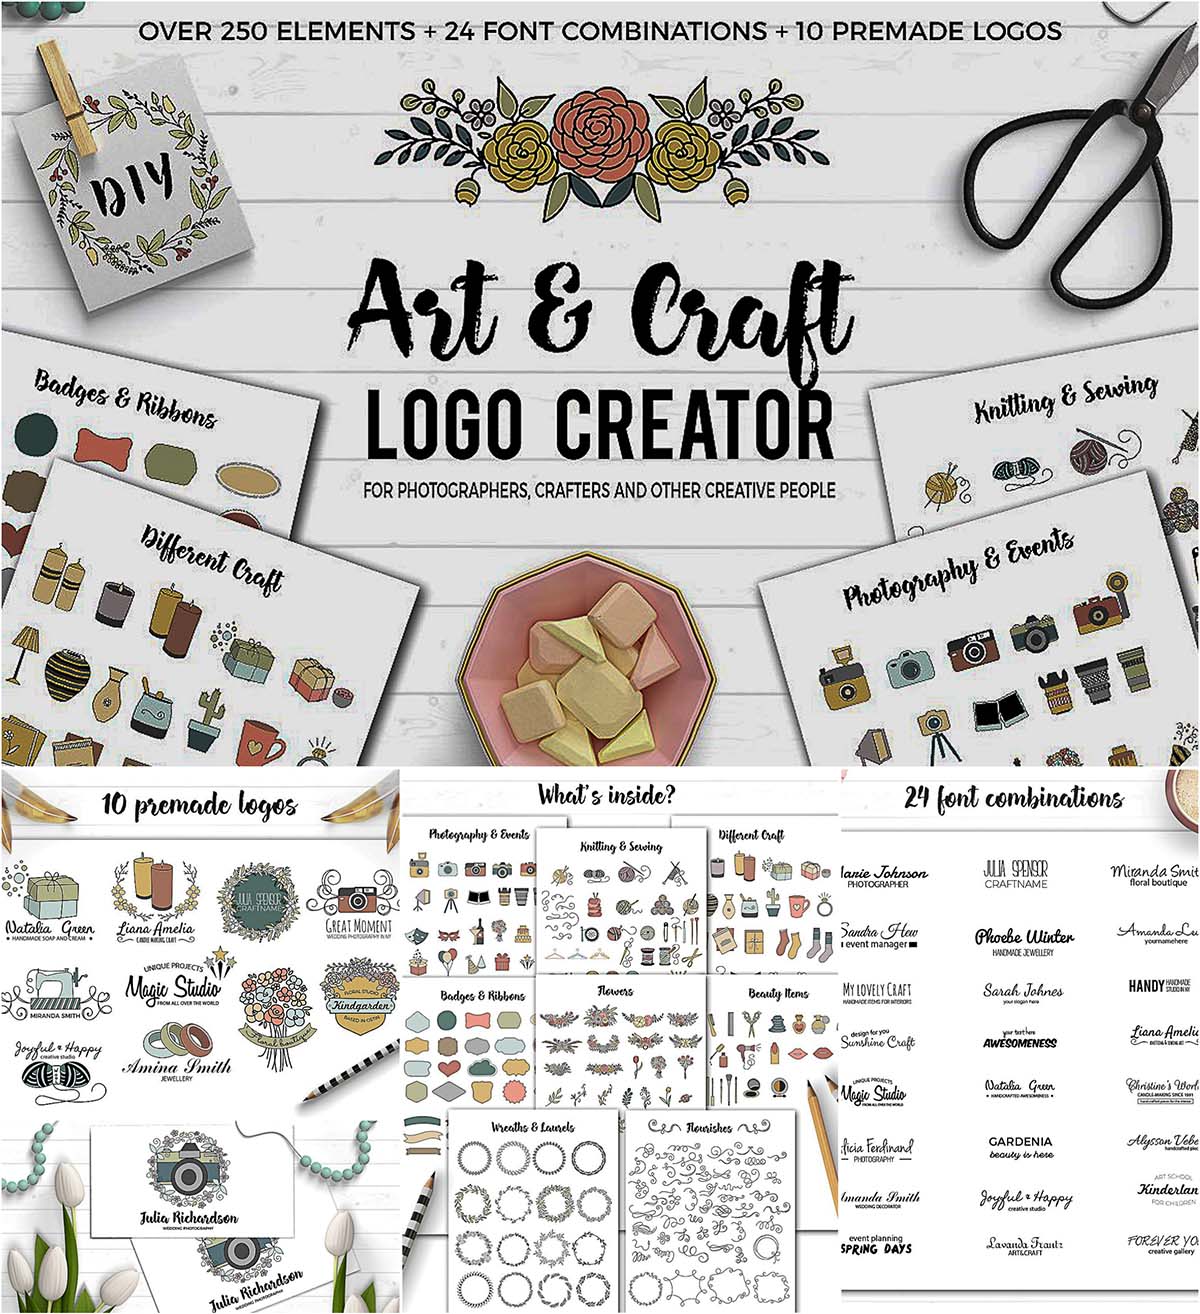 Craft logo creator